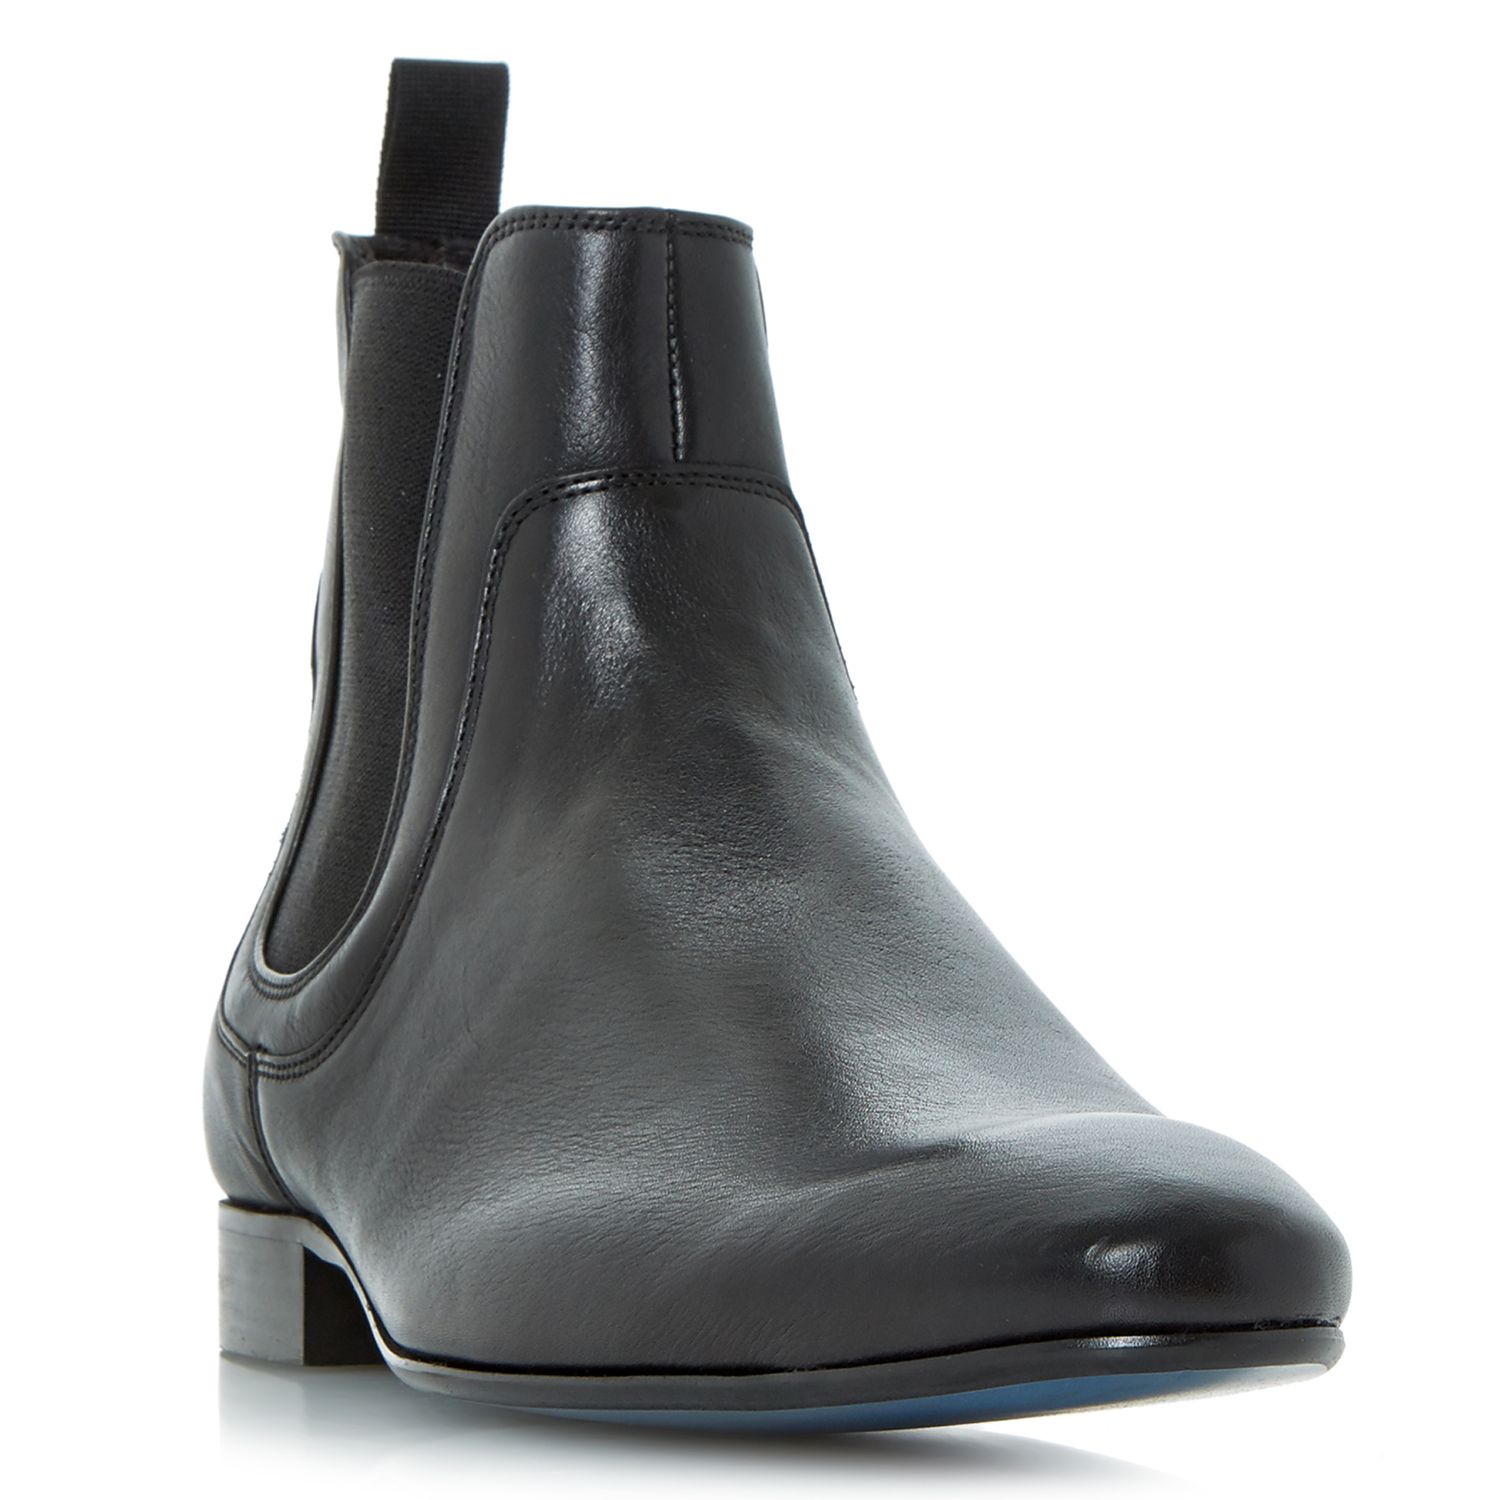 Bertie Maple Leather Chelsea Boots, Black, 8